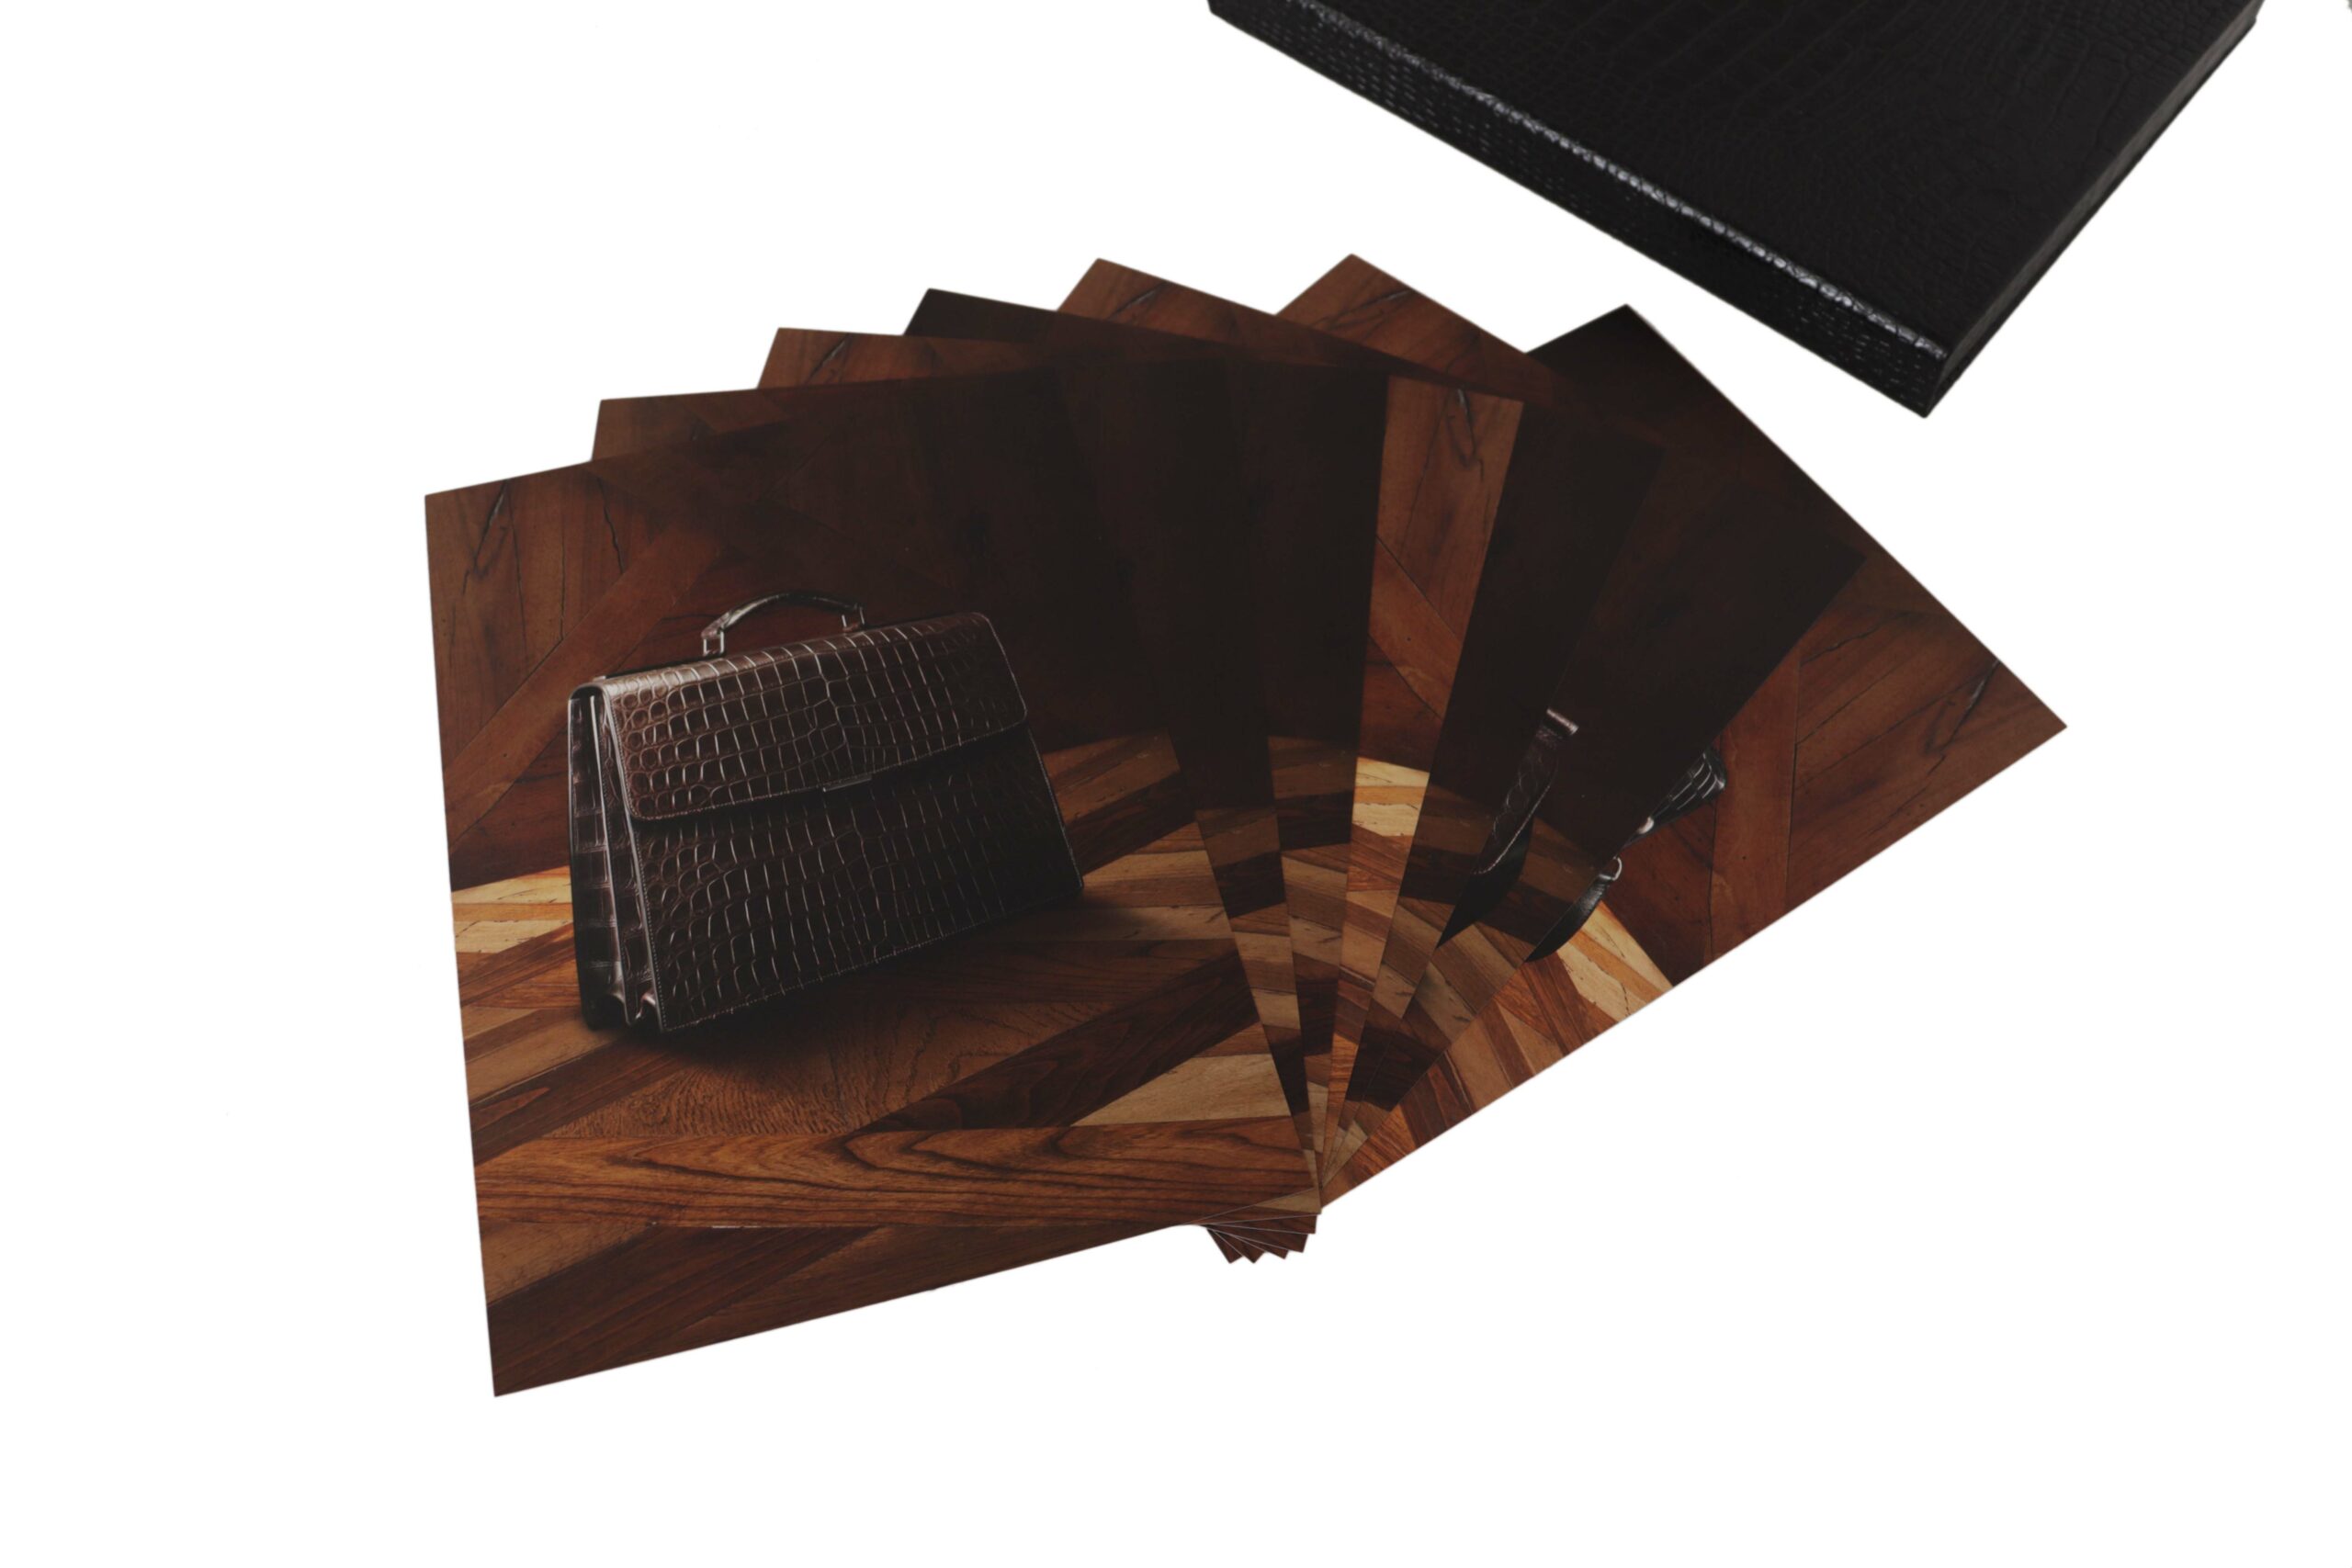 Black Leather Booklet Decor Mens Case Catalogue Folding Book